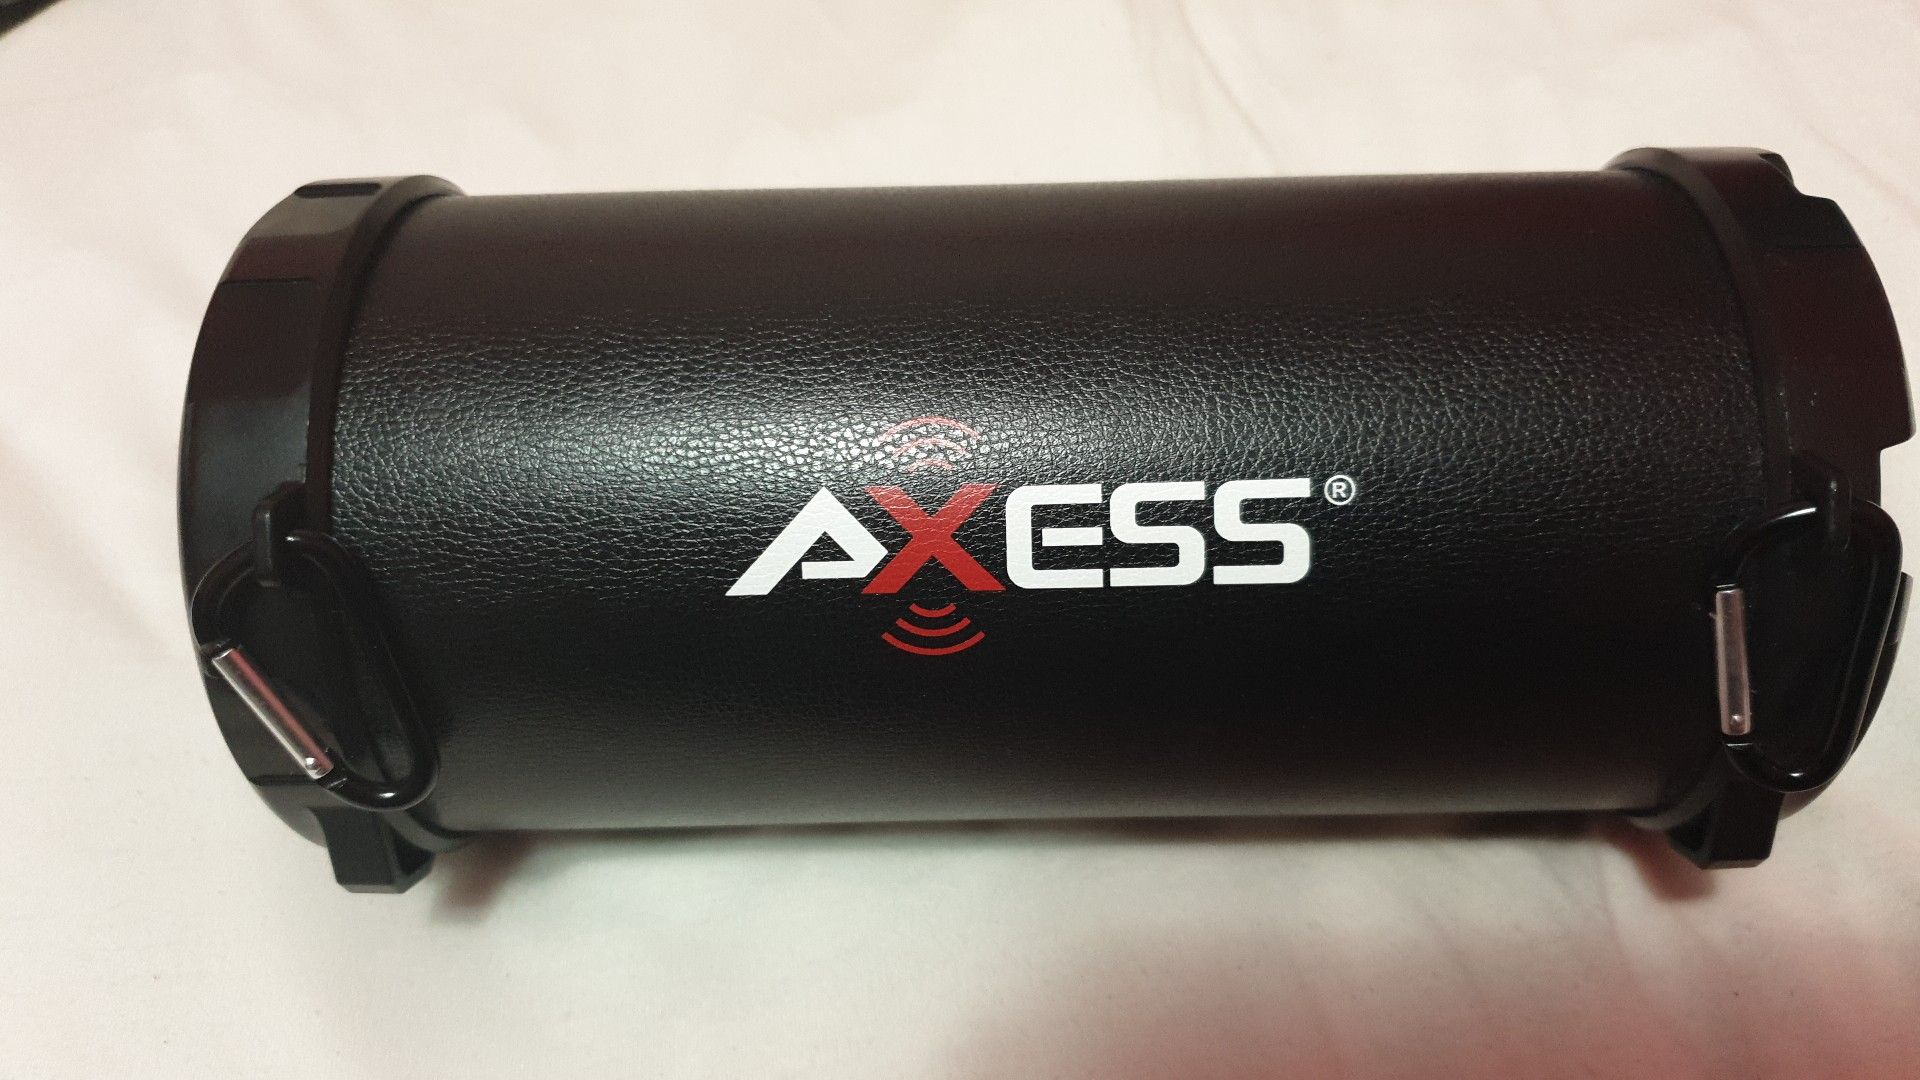 Axess Bluetooth portable speaker